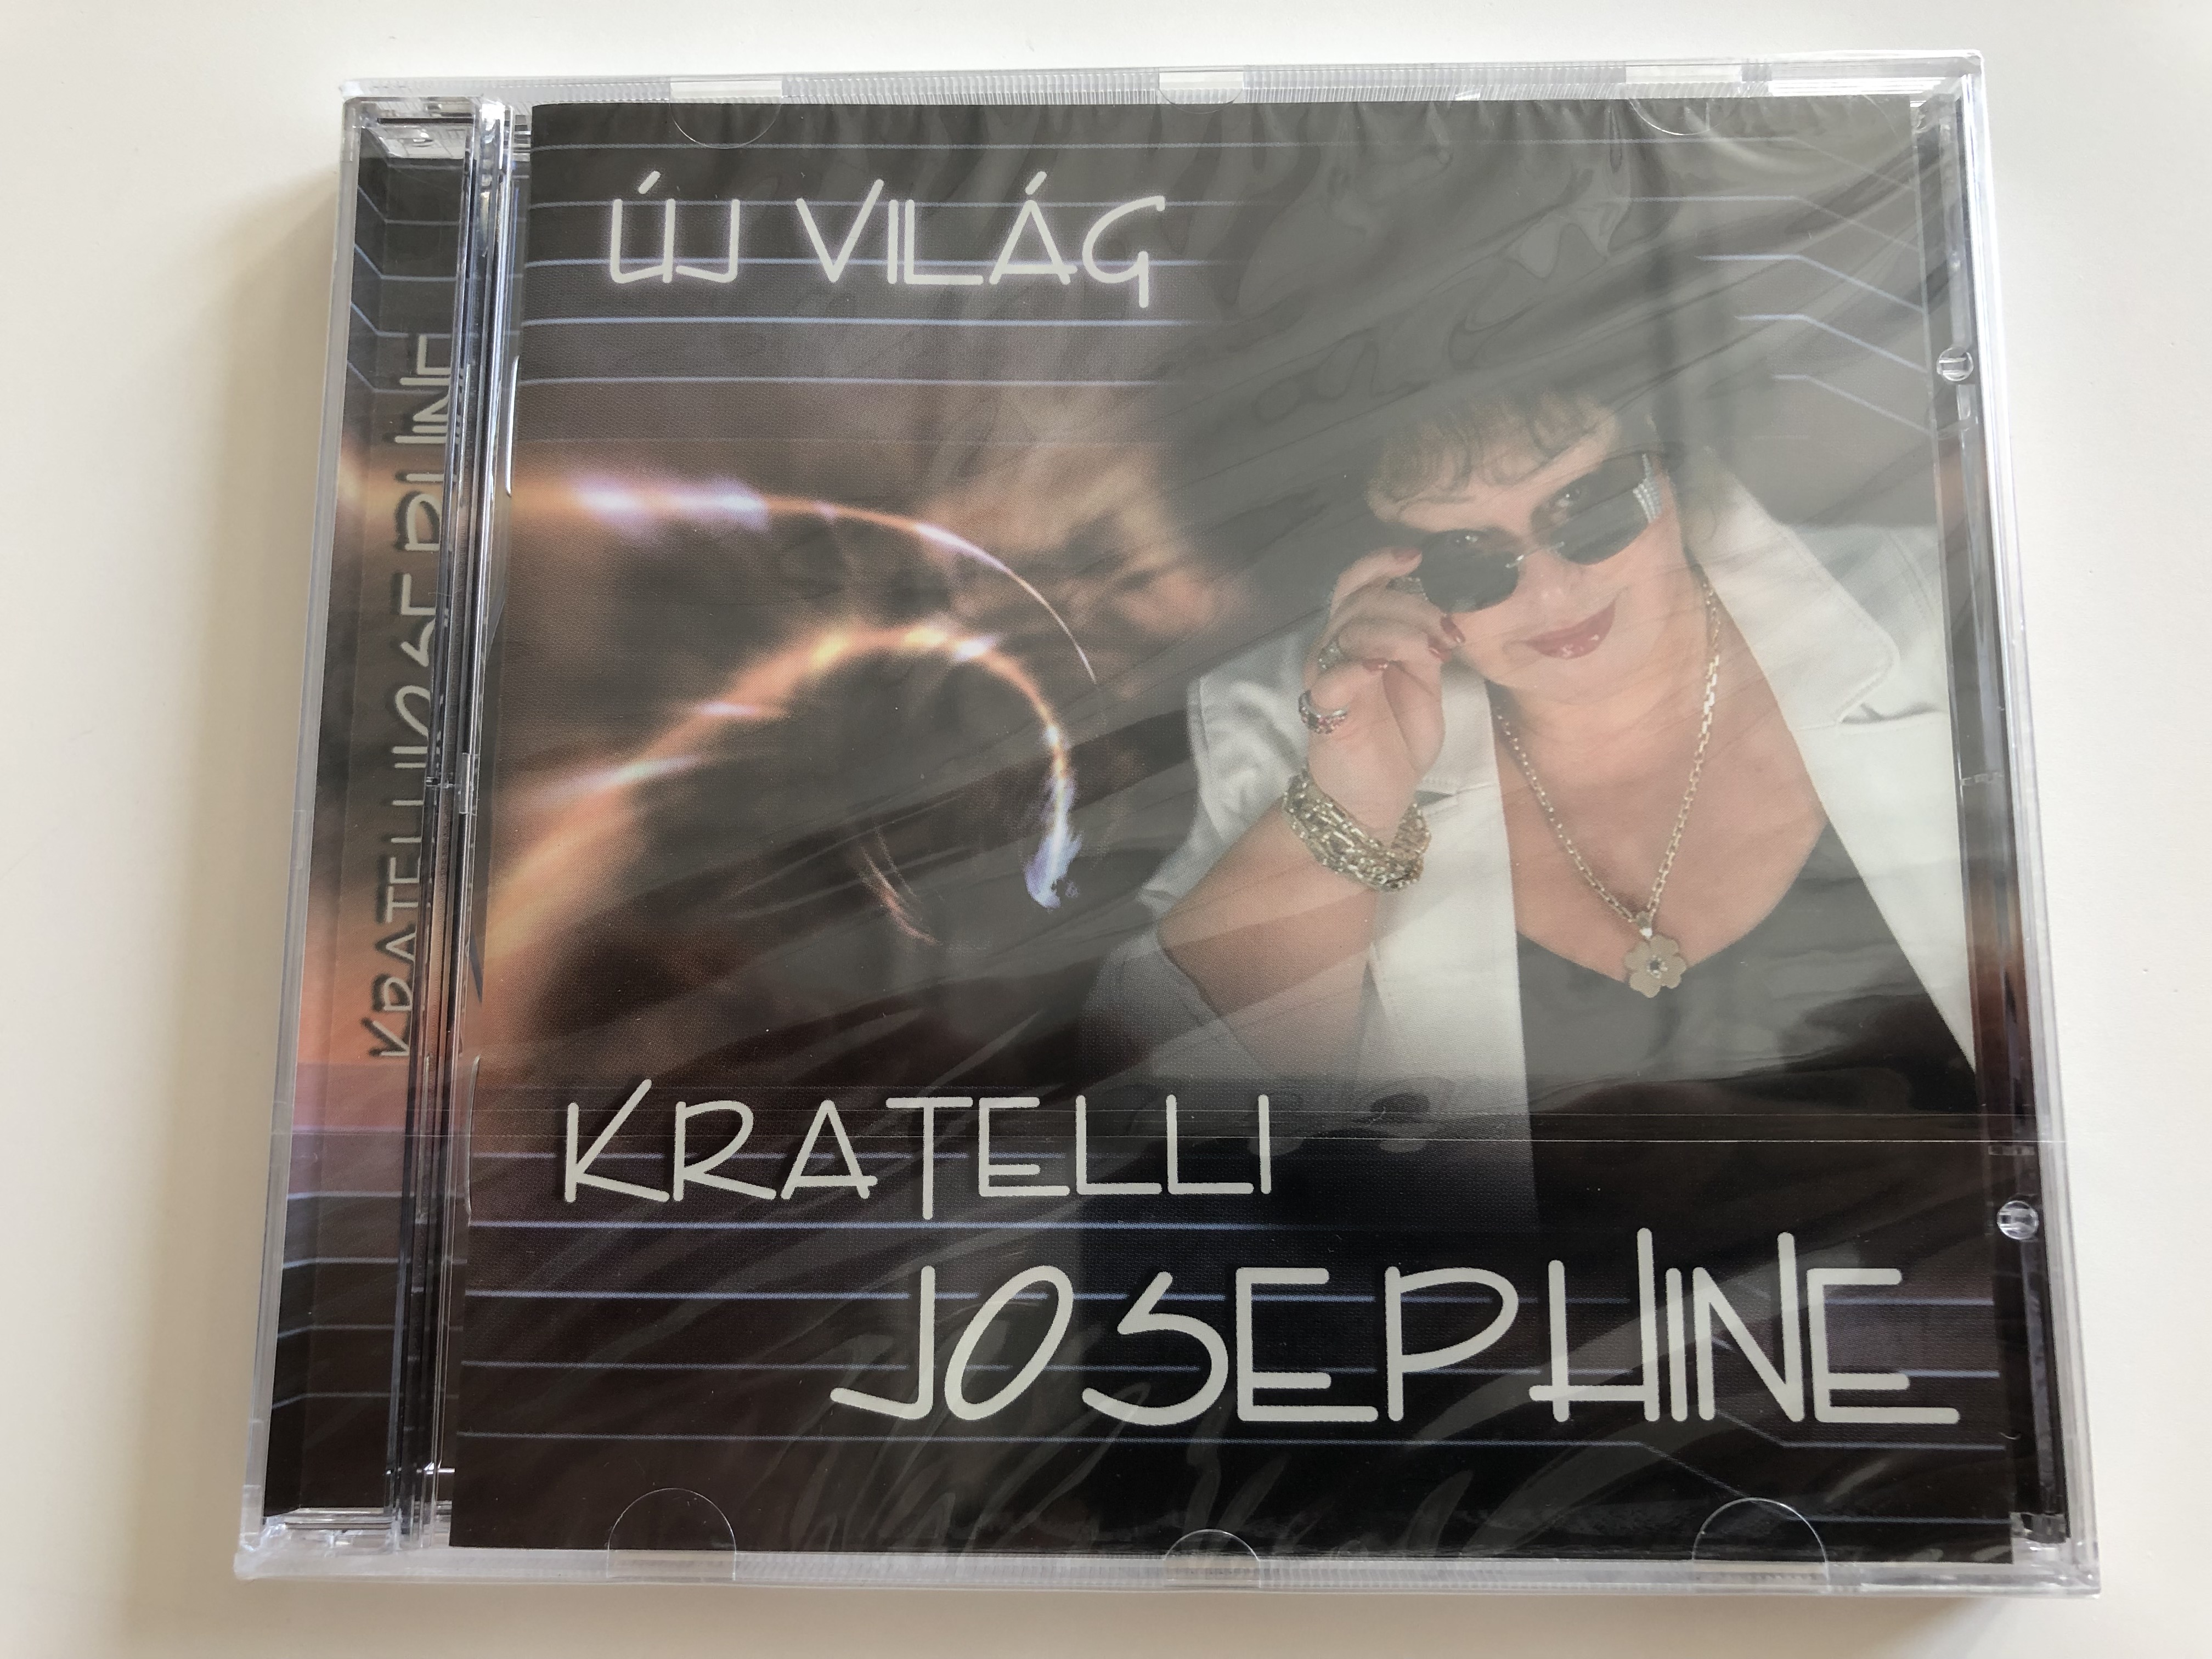 kratelli-josephine-j-vil-g-josephine-s-t-rsai-produkci-s-iroda-audio-cd-2006-josie-2006001-1-.jpg